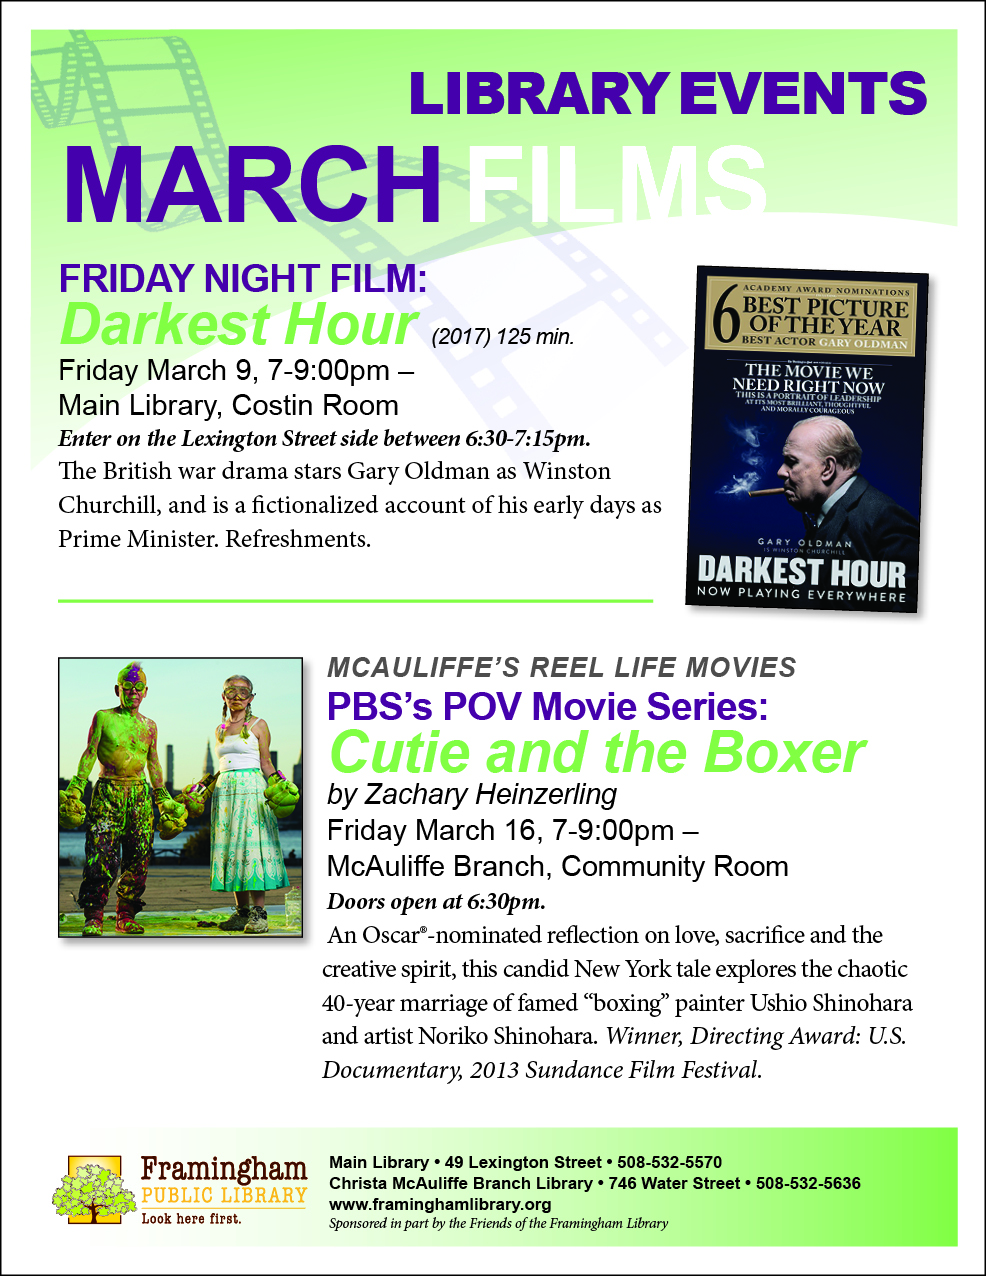 McAuliffe’s Reel Life: PBS’s POV Movie Series: Cutie and the Boxer thumbnail Photo